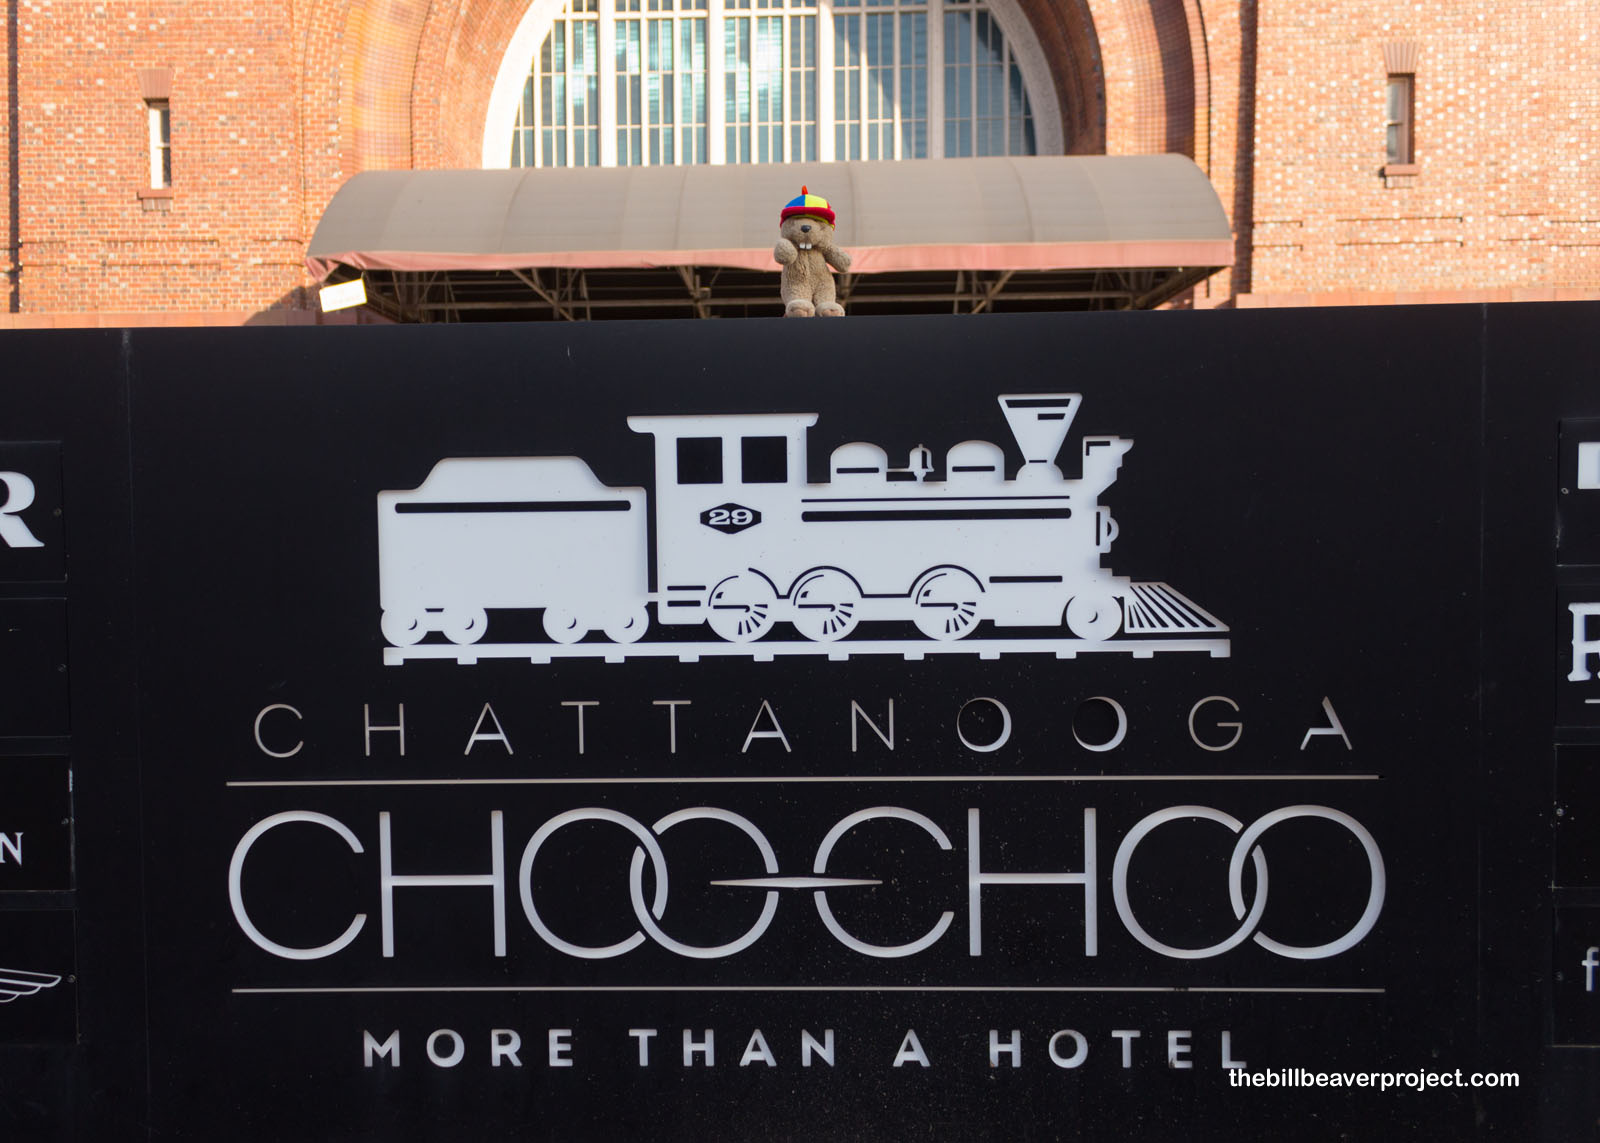 Terminal Station (Chattanooga Choo Choo)